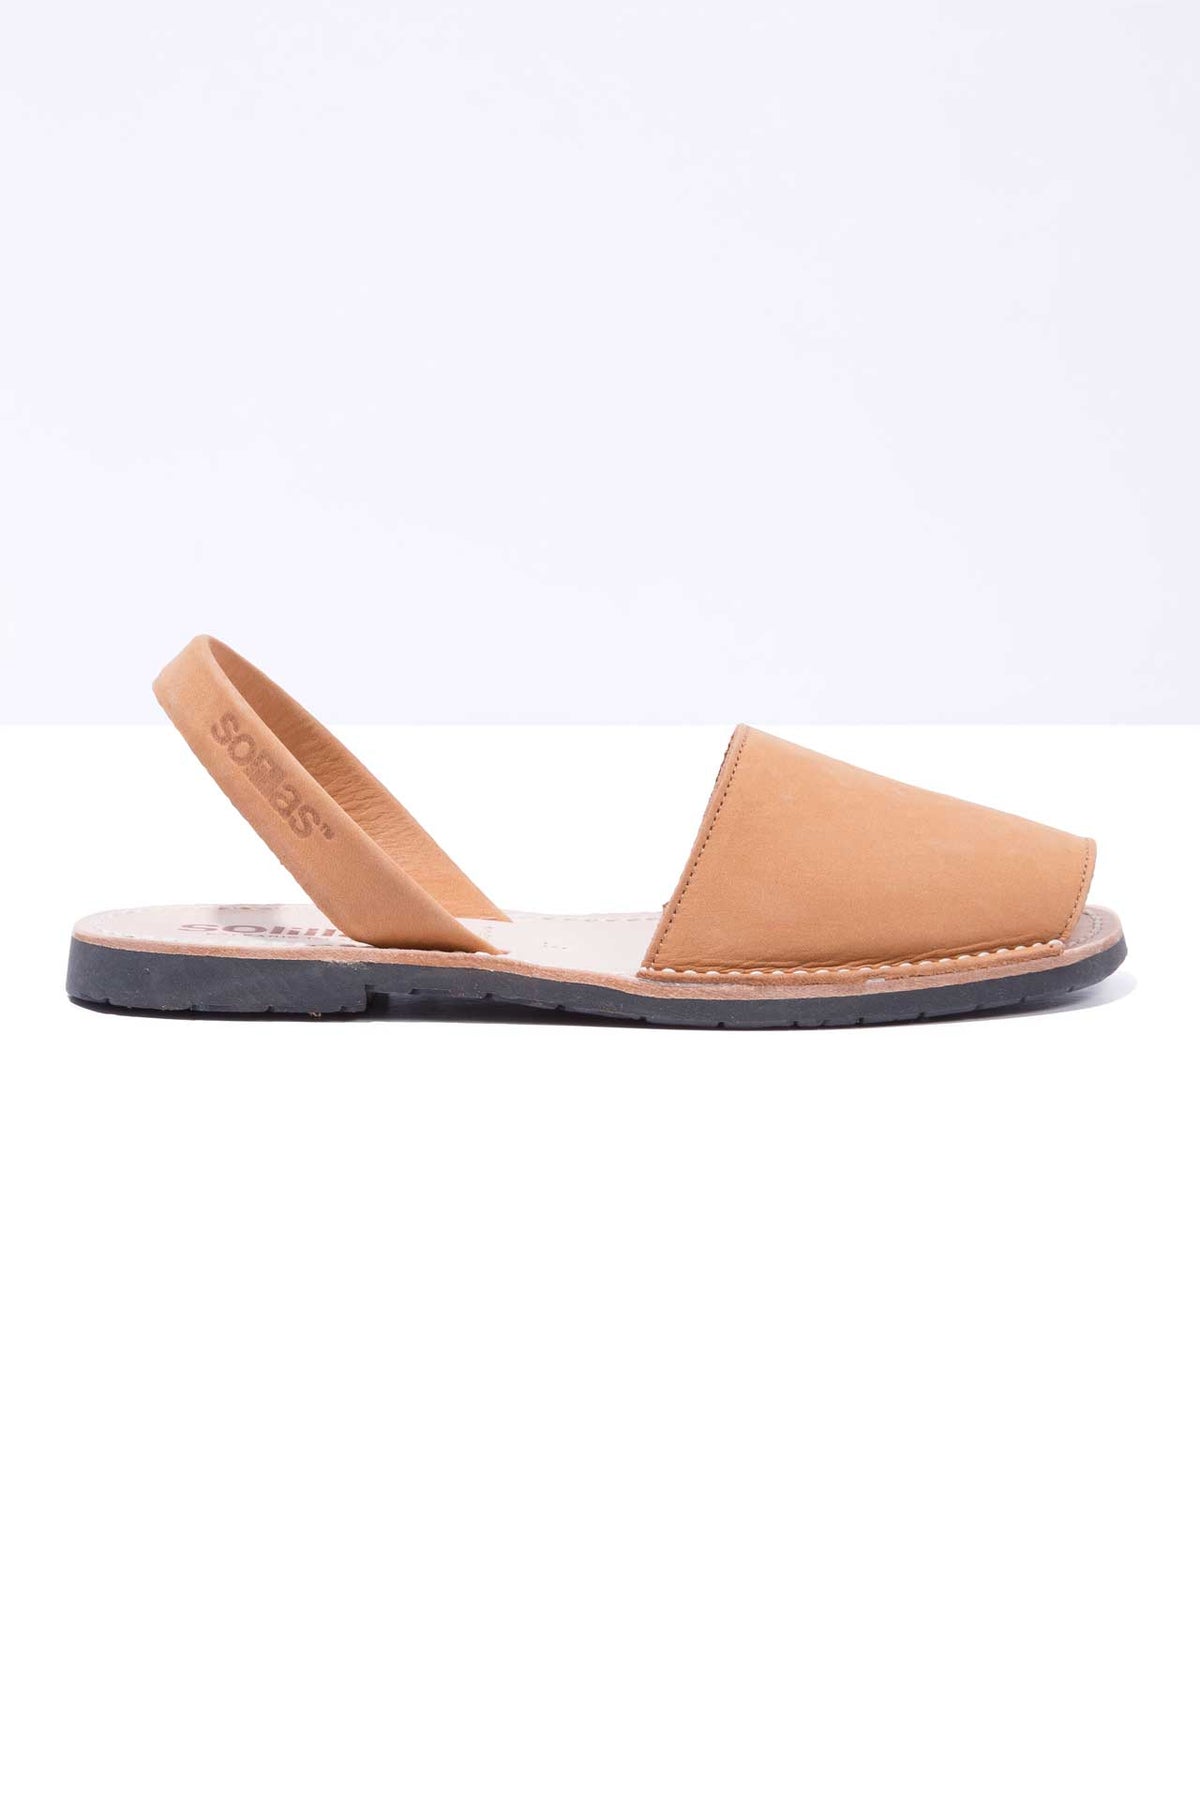 Original Menorcan Sandals | Tan Nubuck Leather - Cuero | Solillas ...